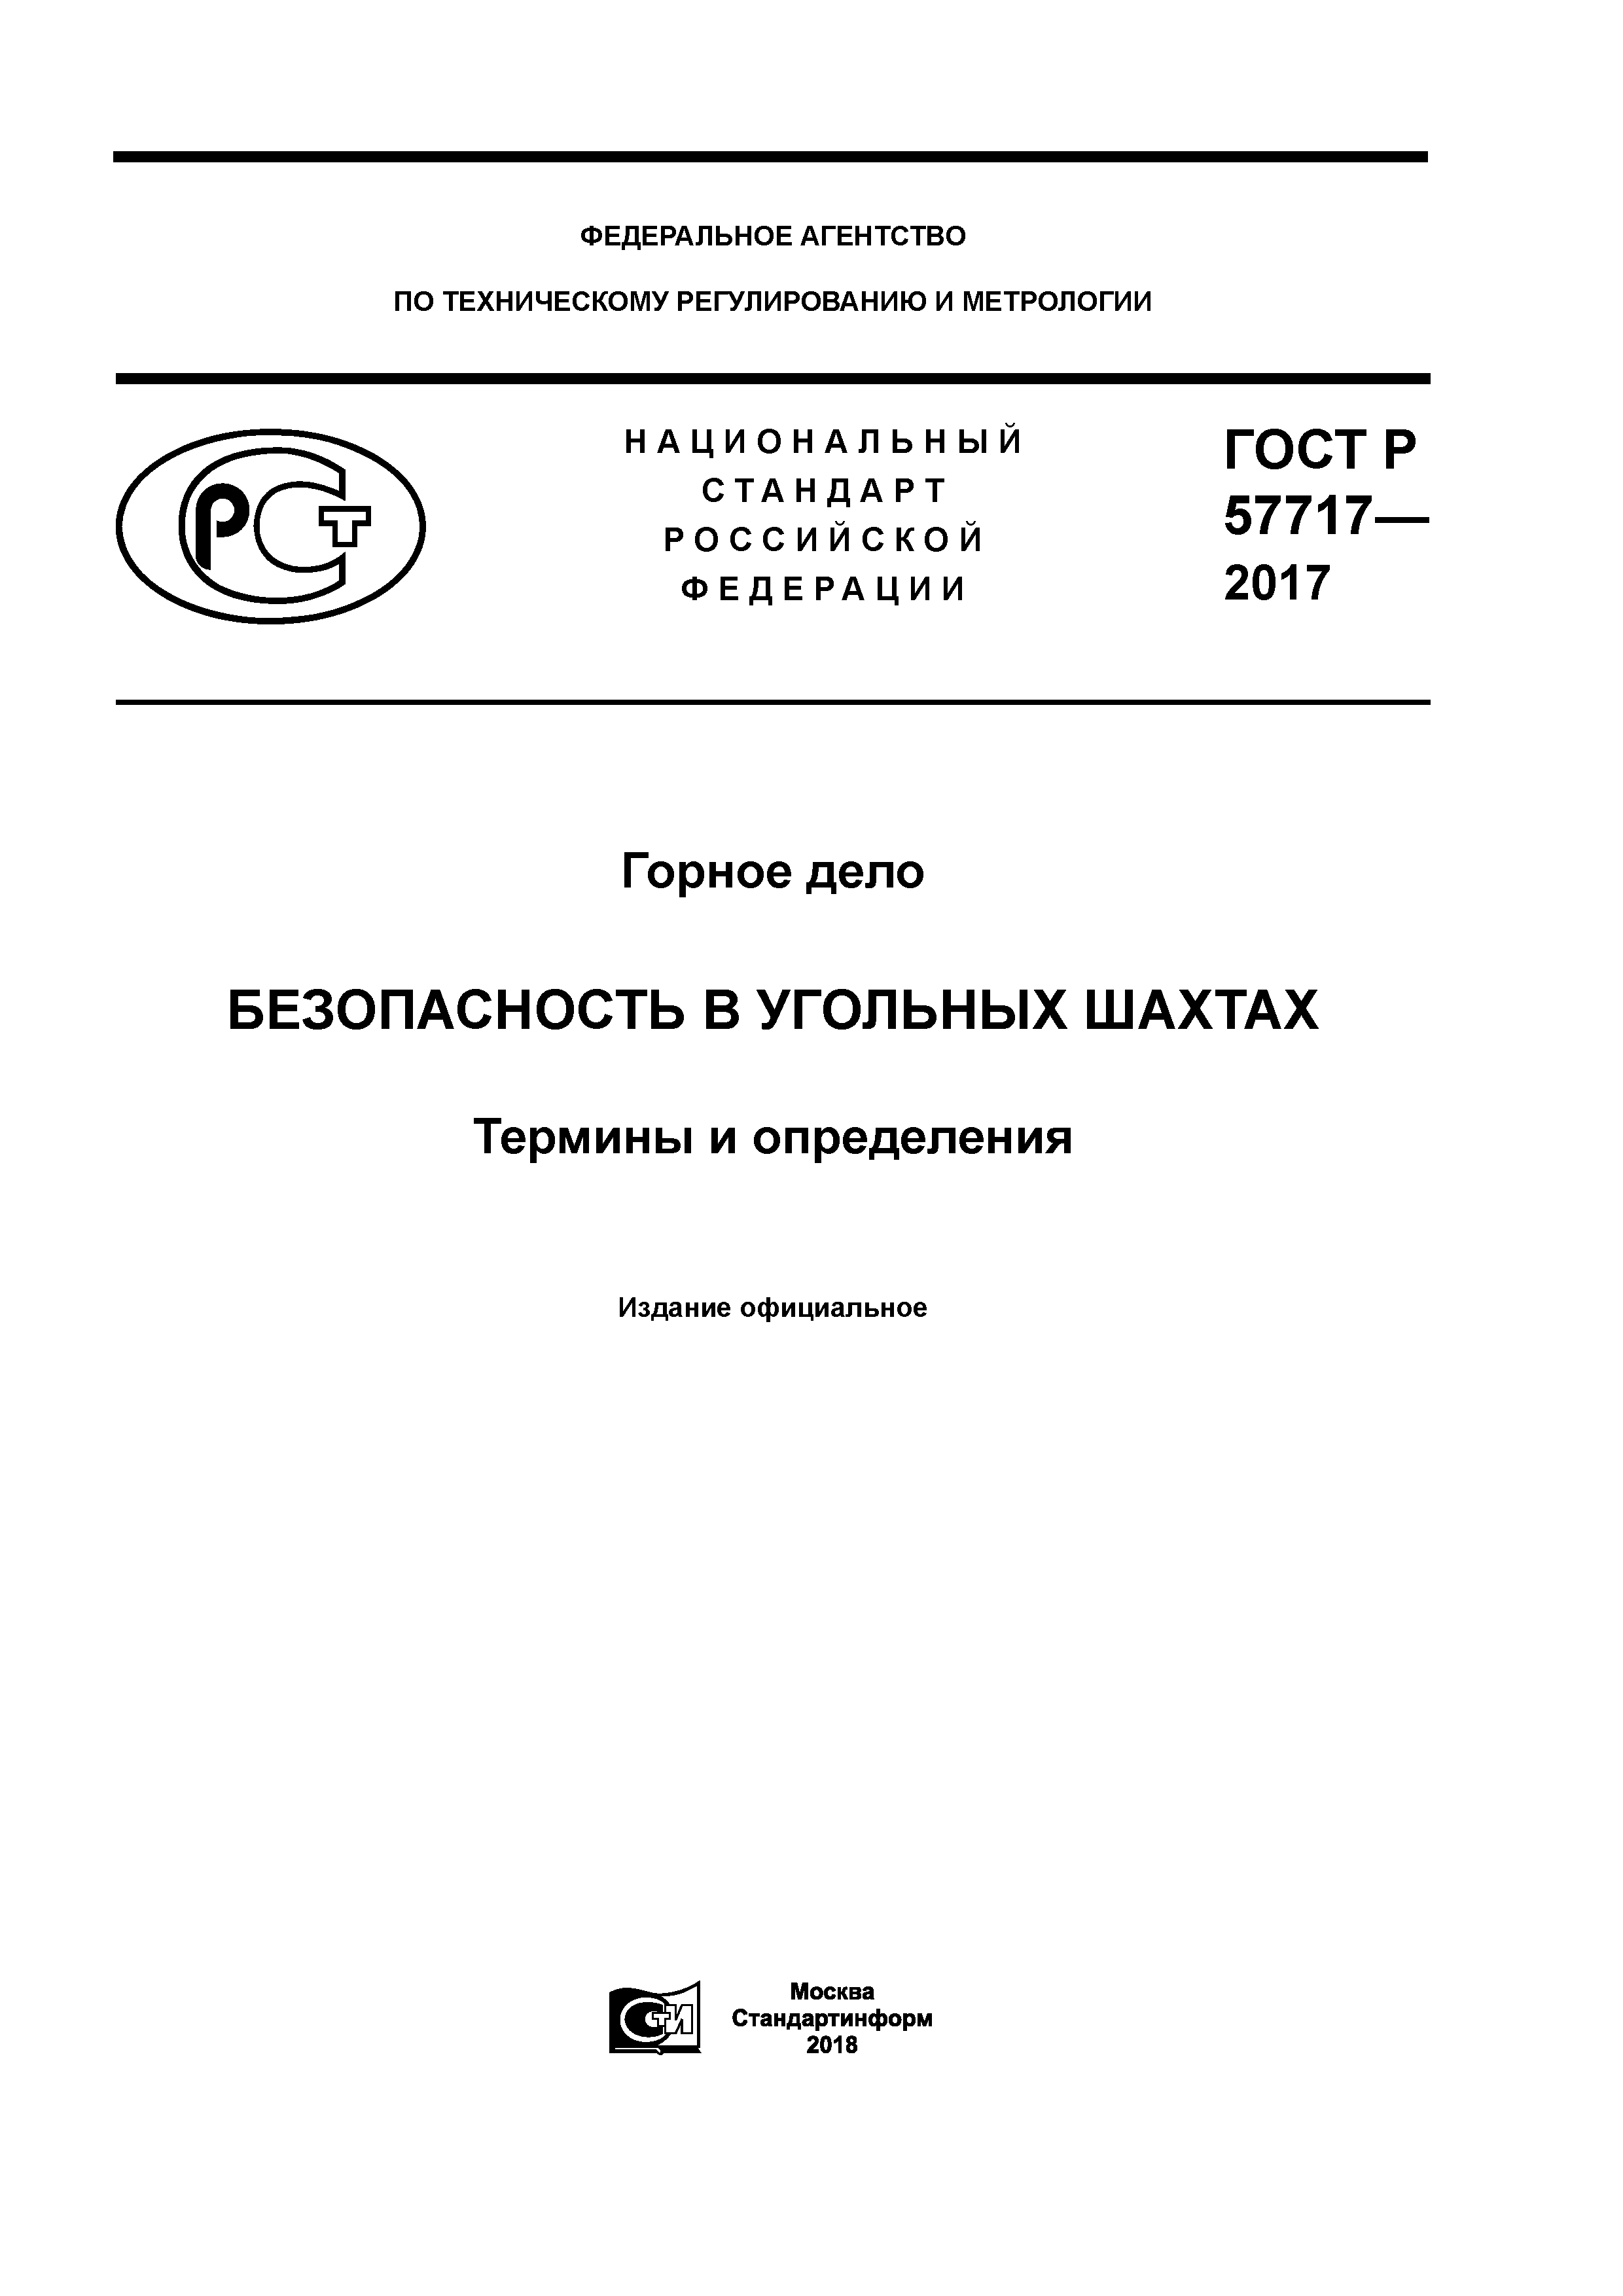 ГОСТ Р 57717-2017